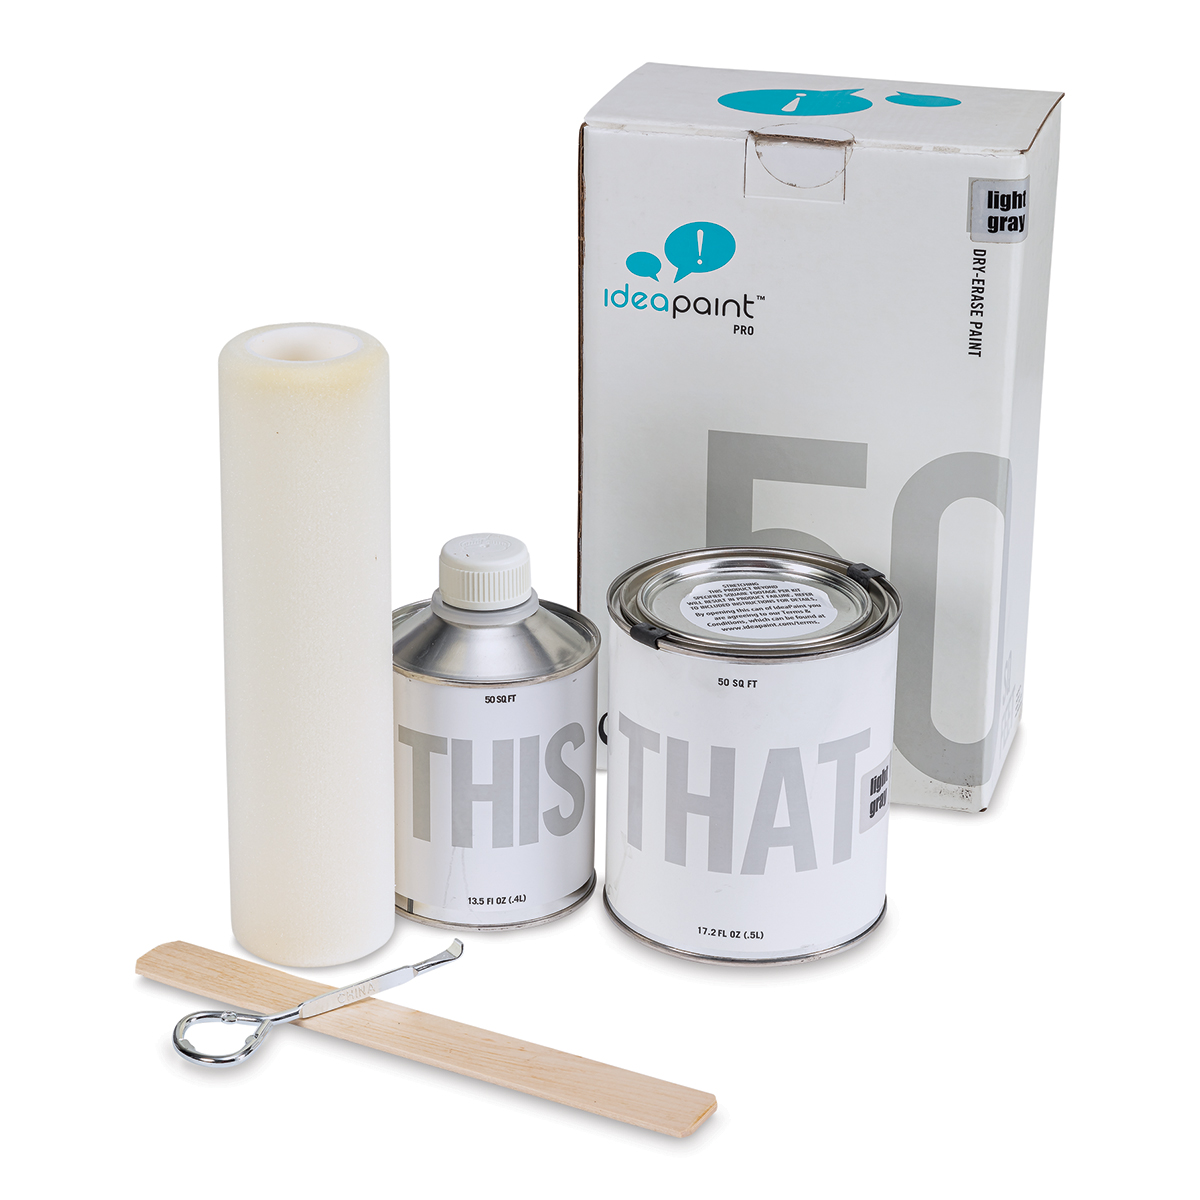 IdeaPaint PRO Series Dry Erase Paint Kit - Light Gray